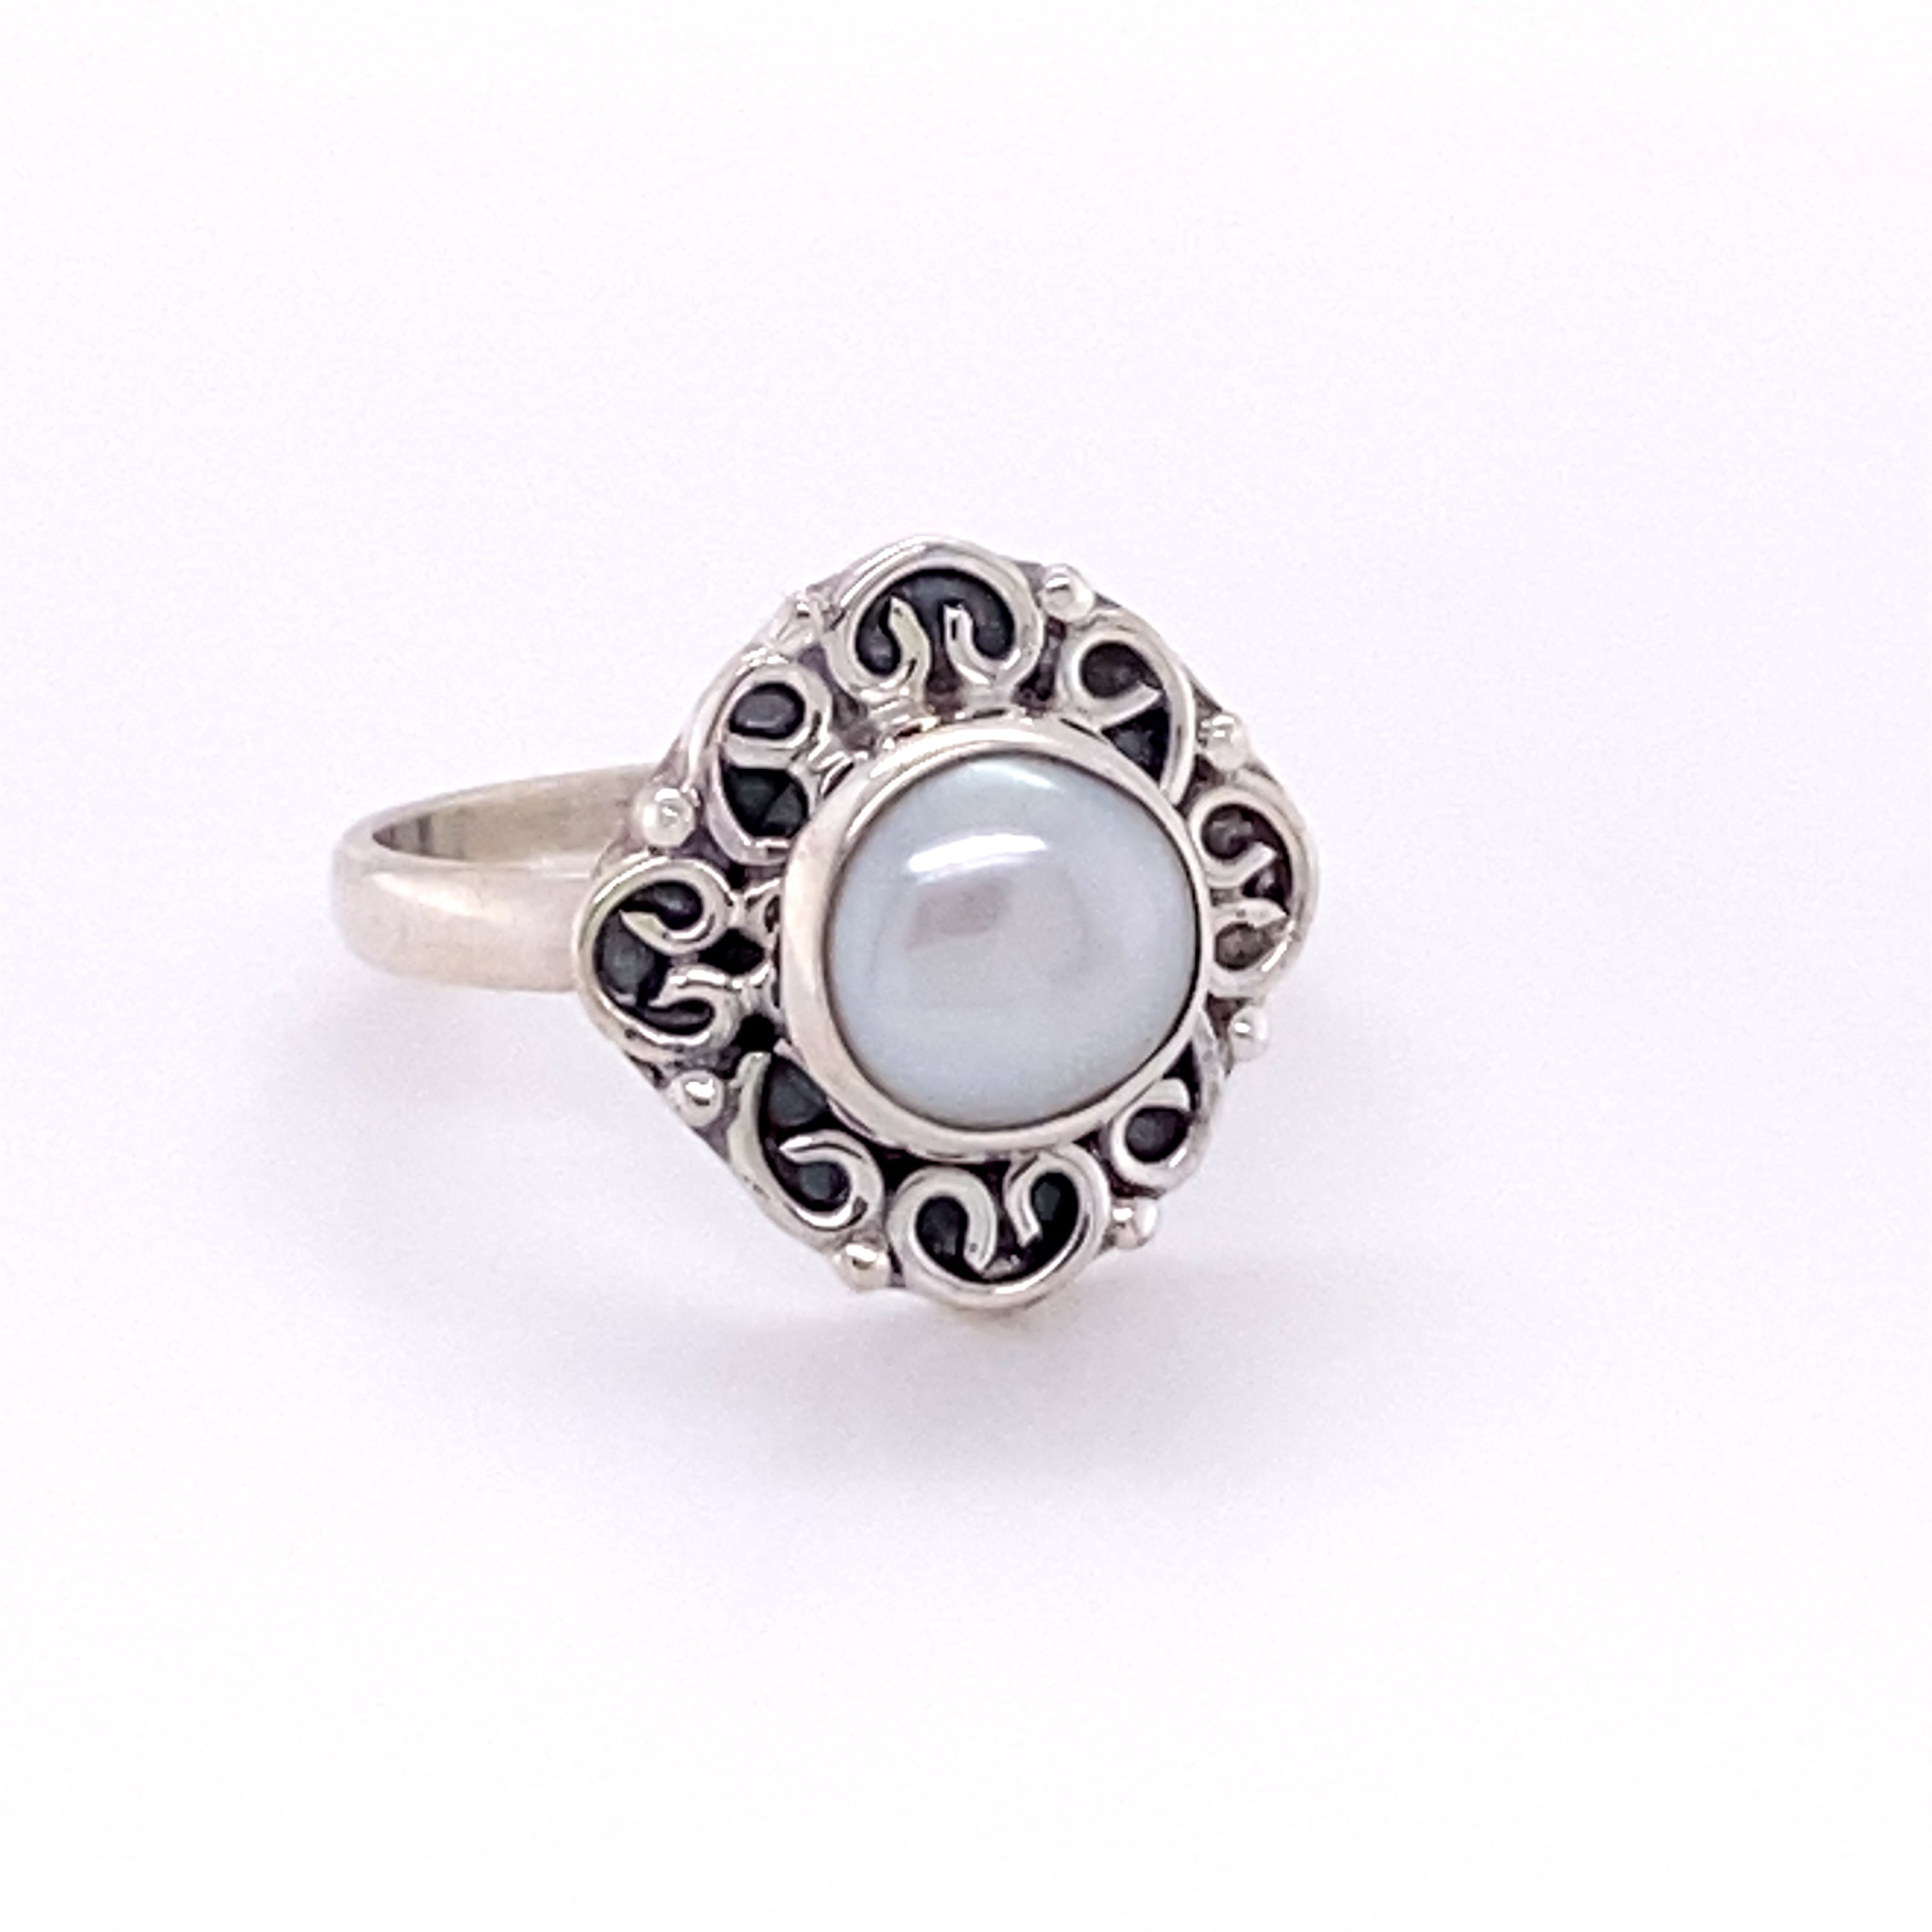 Oval Gemstone Ring with Swirl Filigree Border – Super Silver